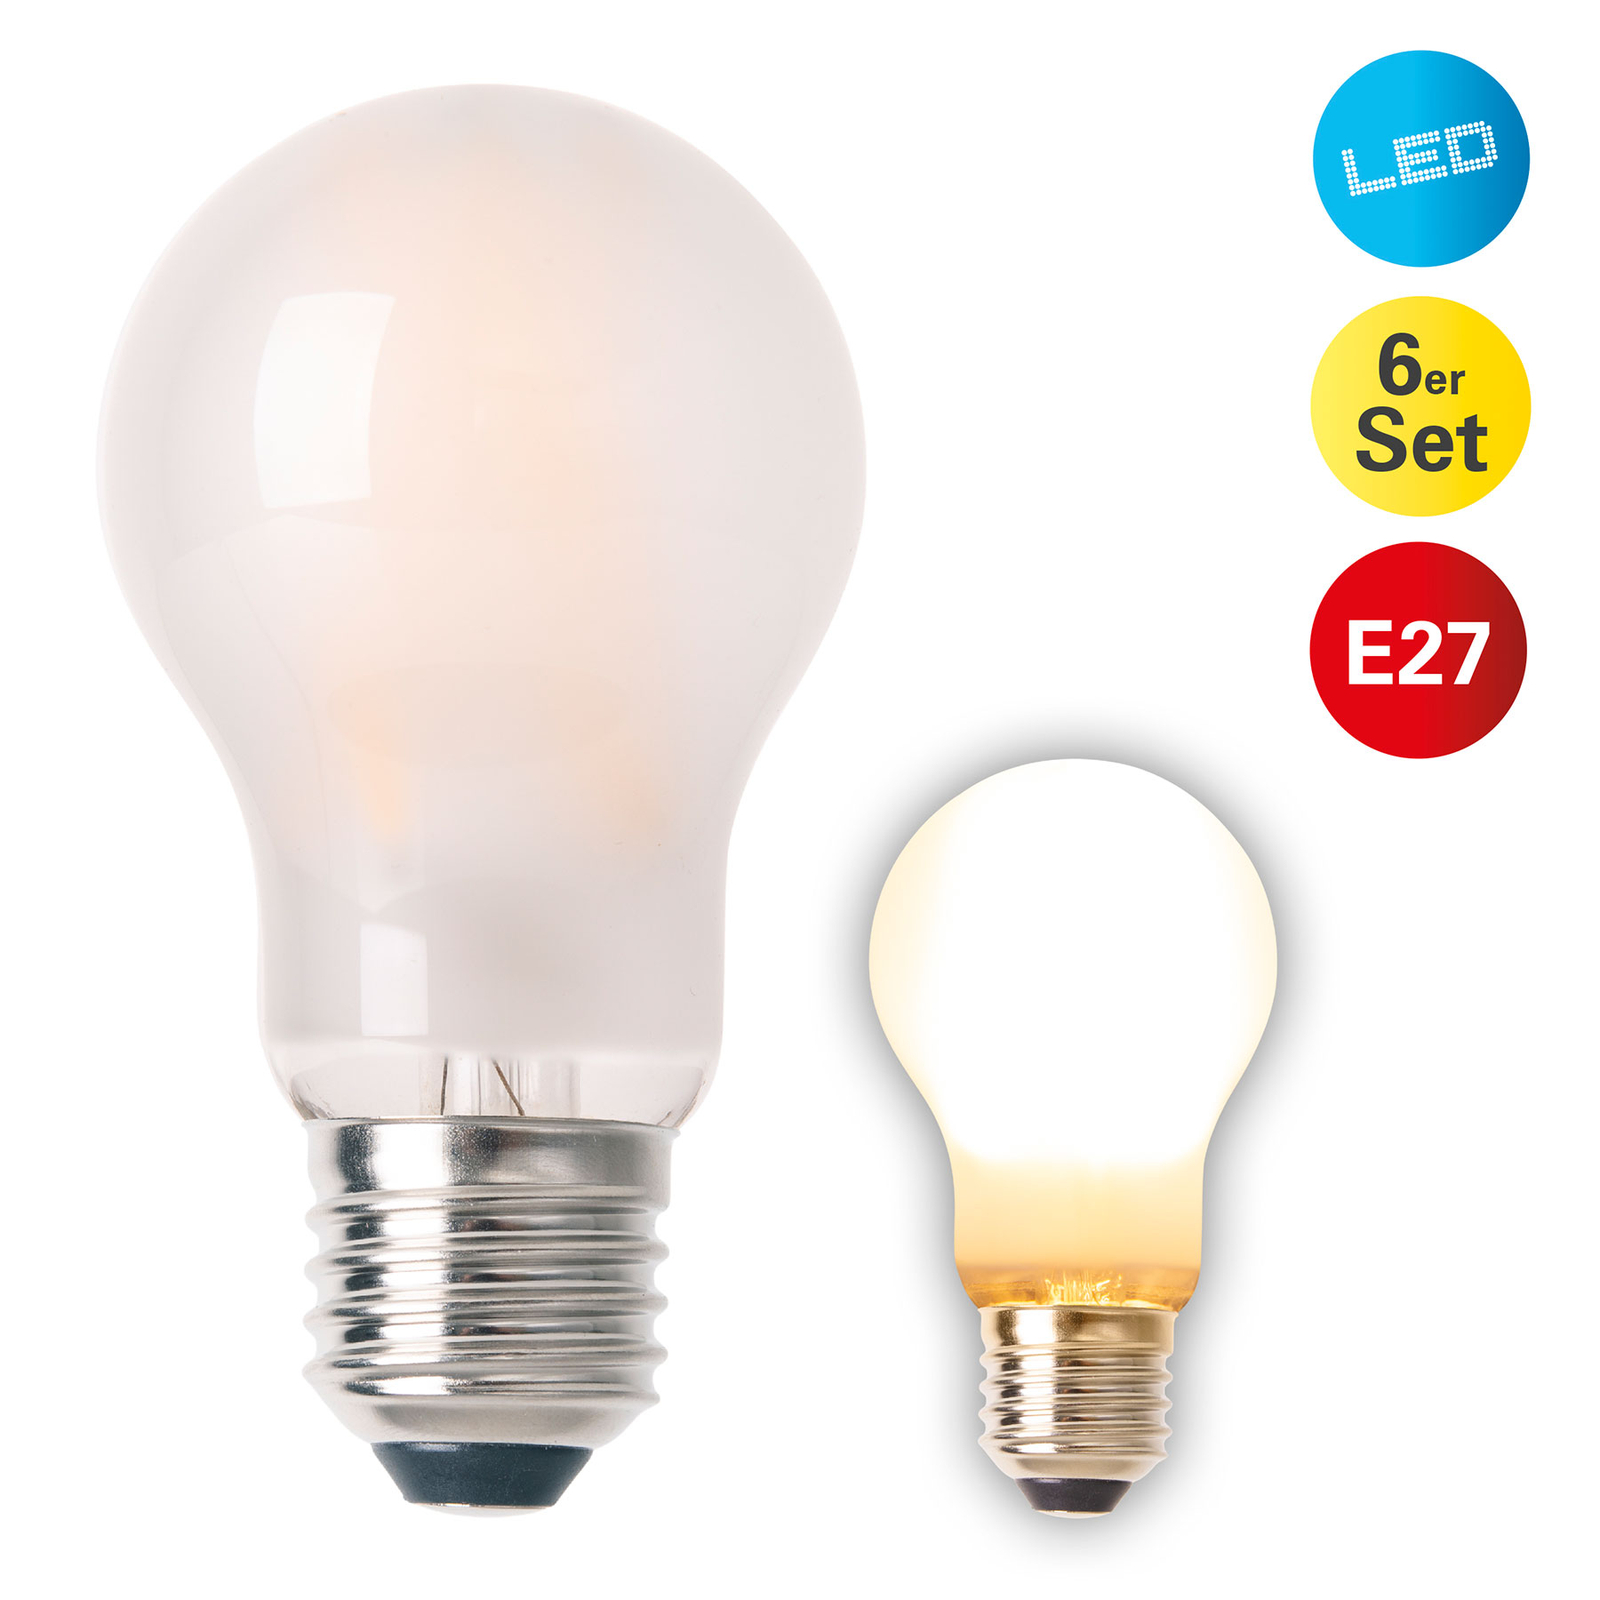 LED lamp E27 8,3W 750 Lumen warmwit 6 per set